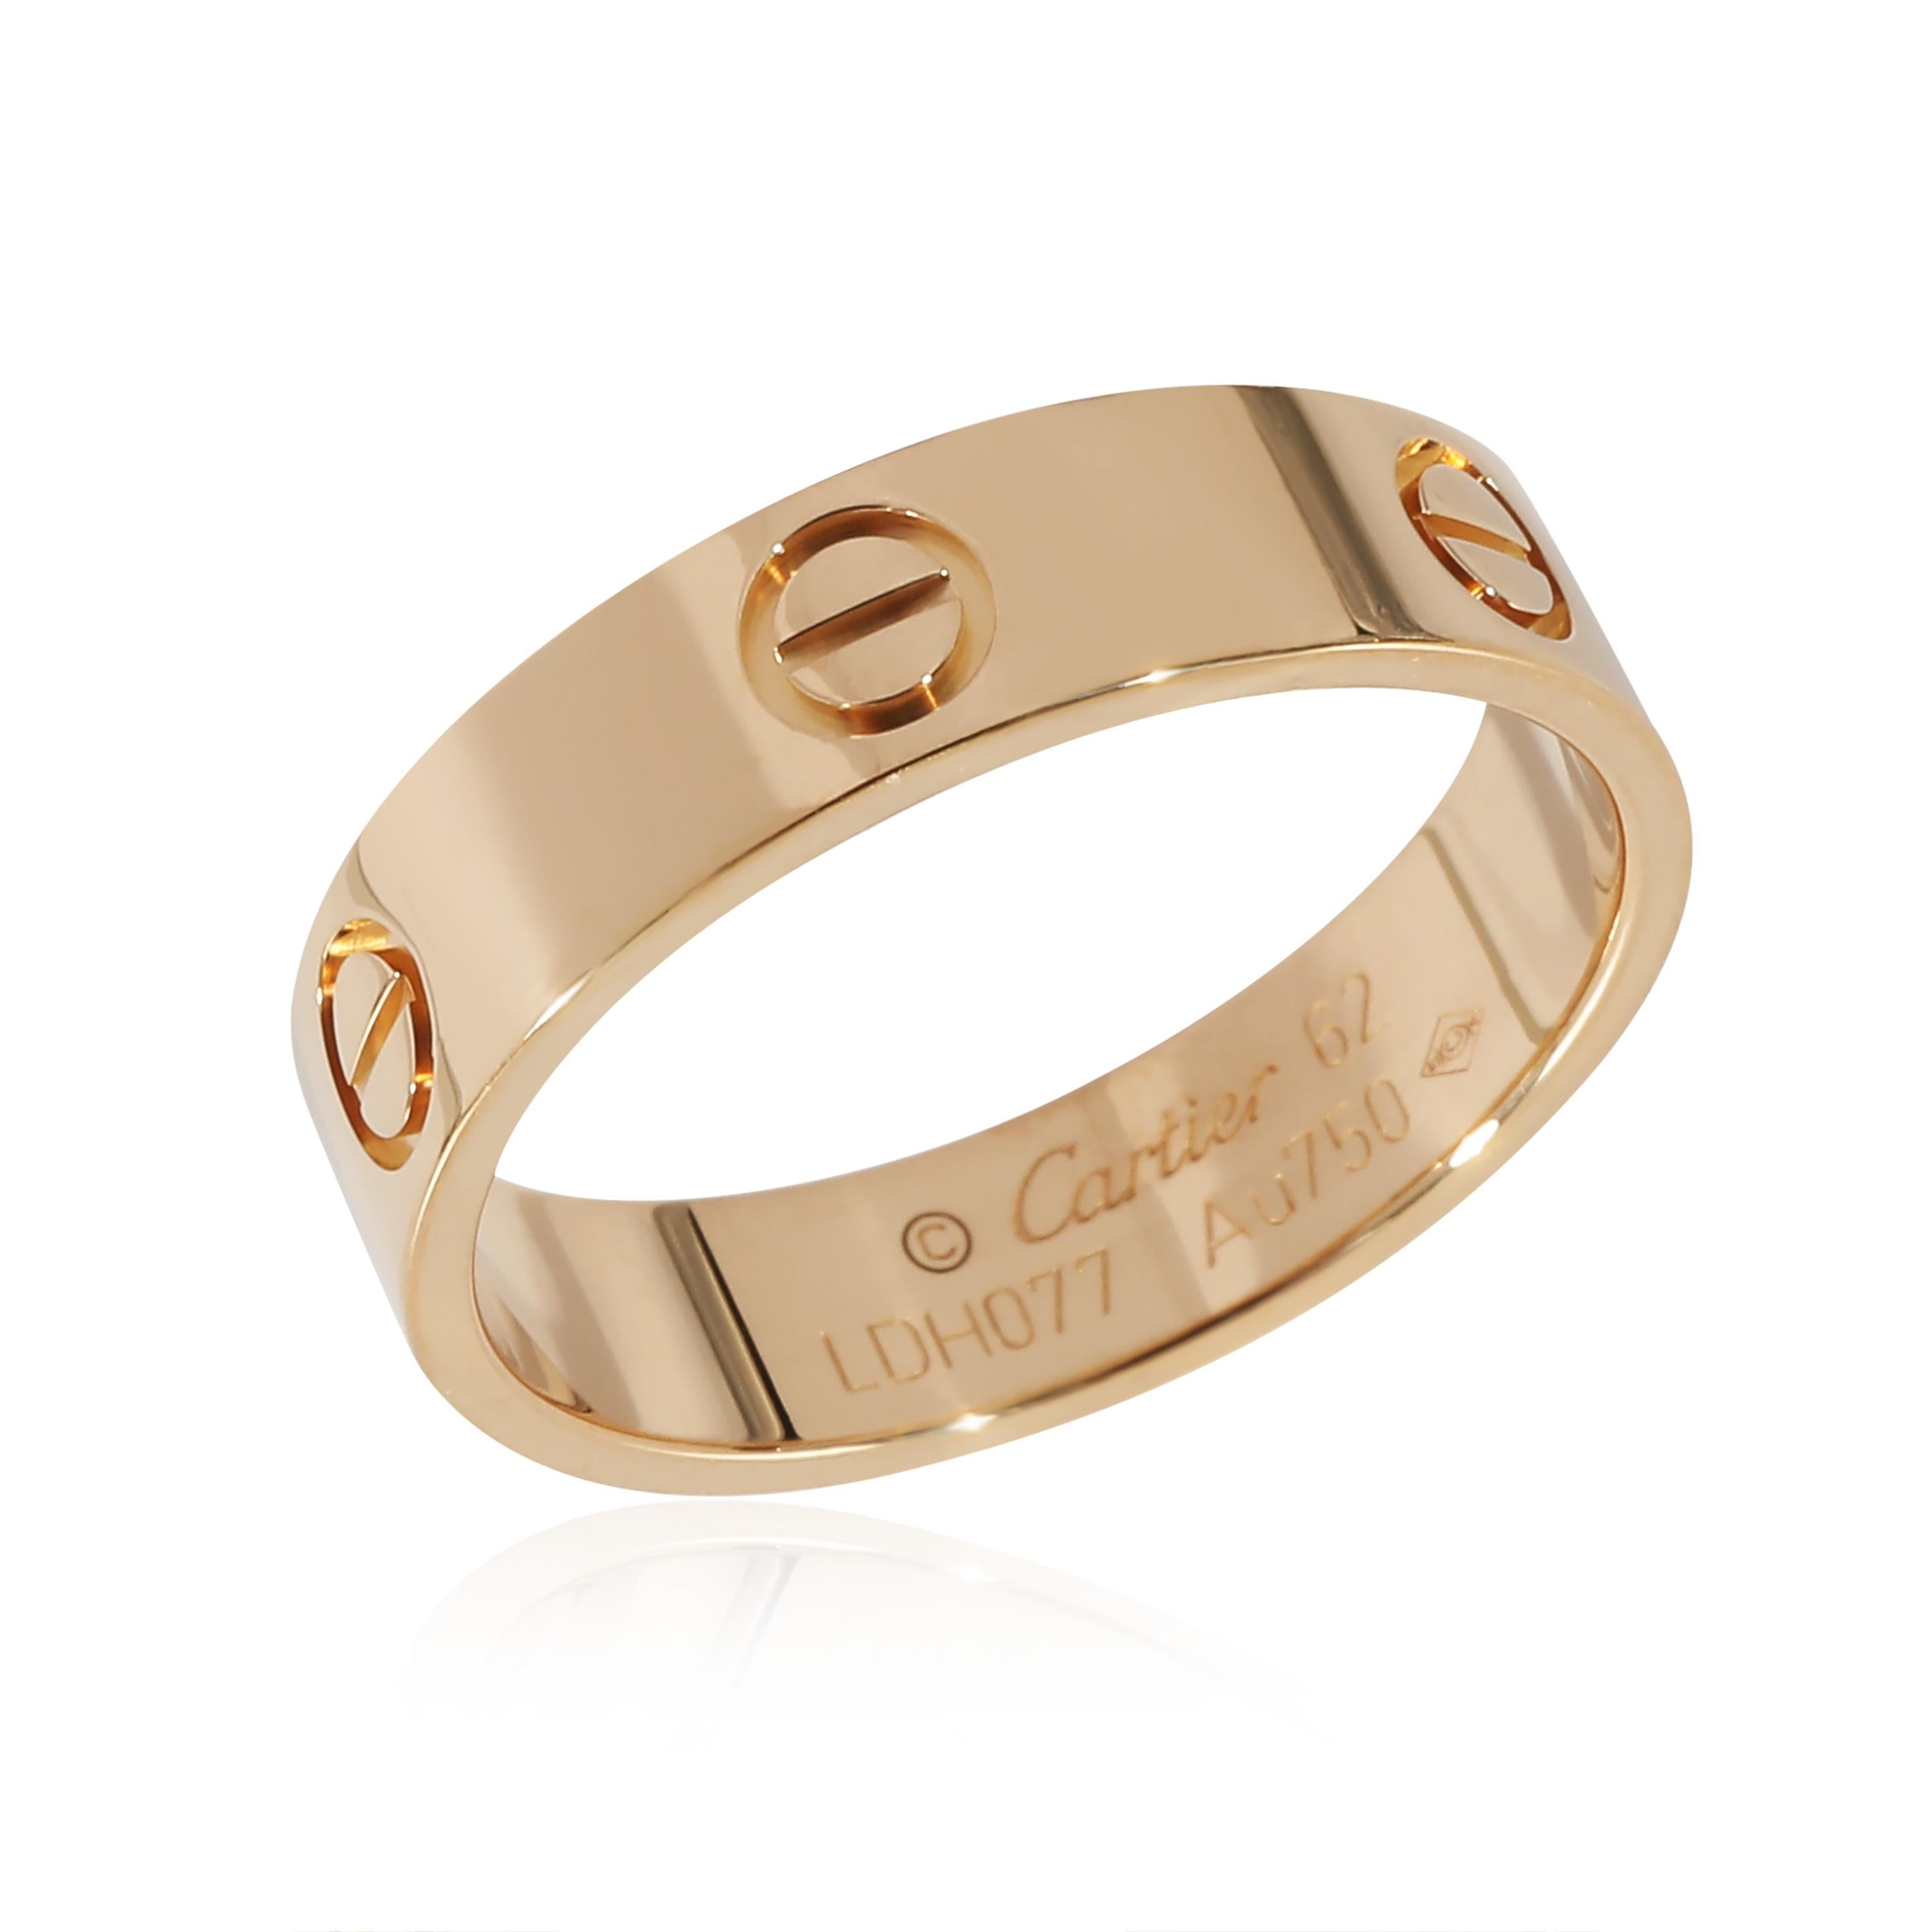 Women's or Men's Cartier Love Ring in 18k Yellow Gold